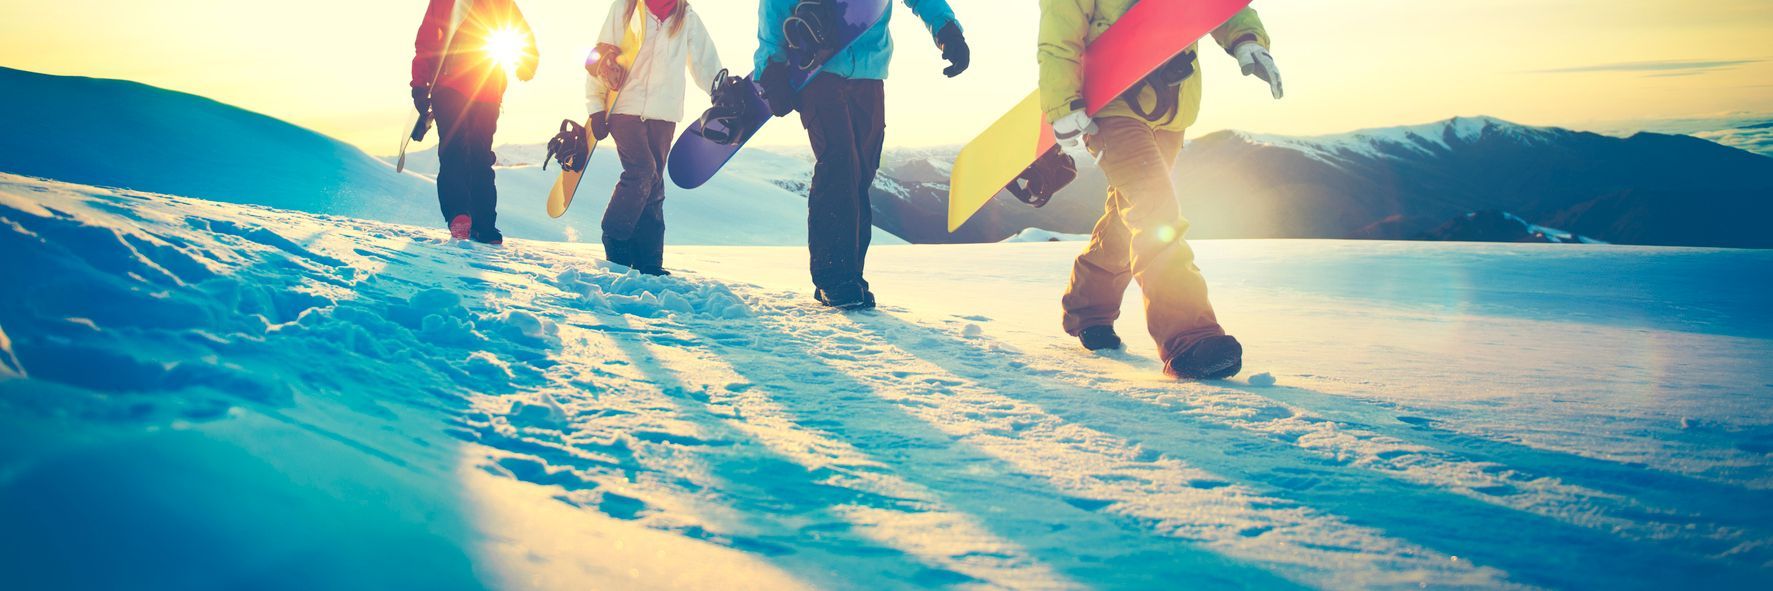 Outdoor Staff Snowboarding Resources